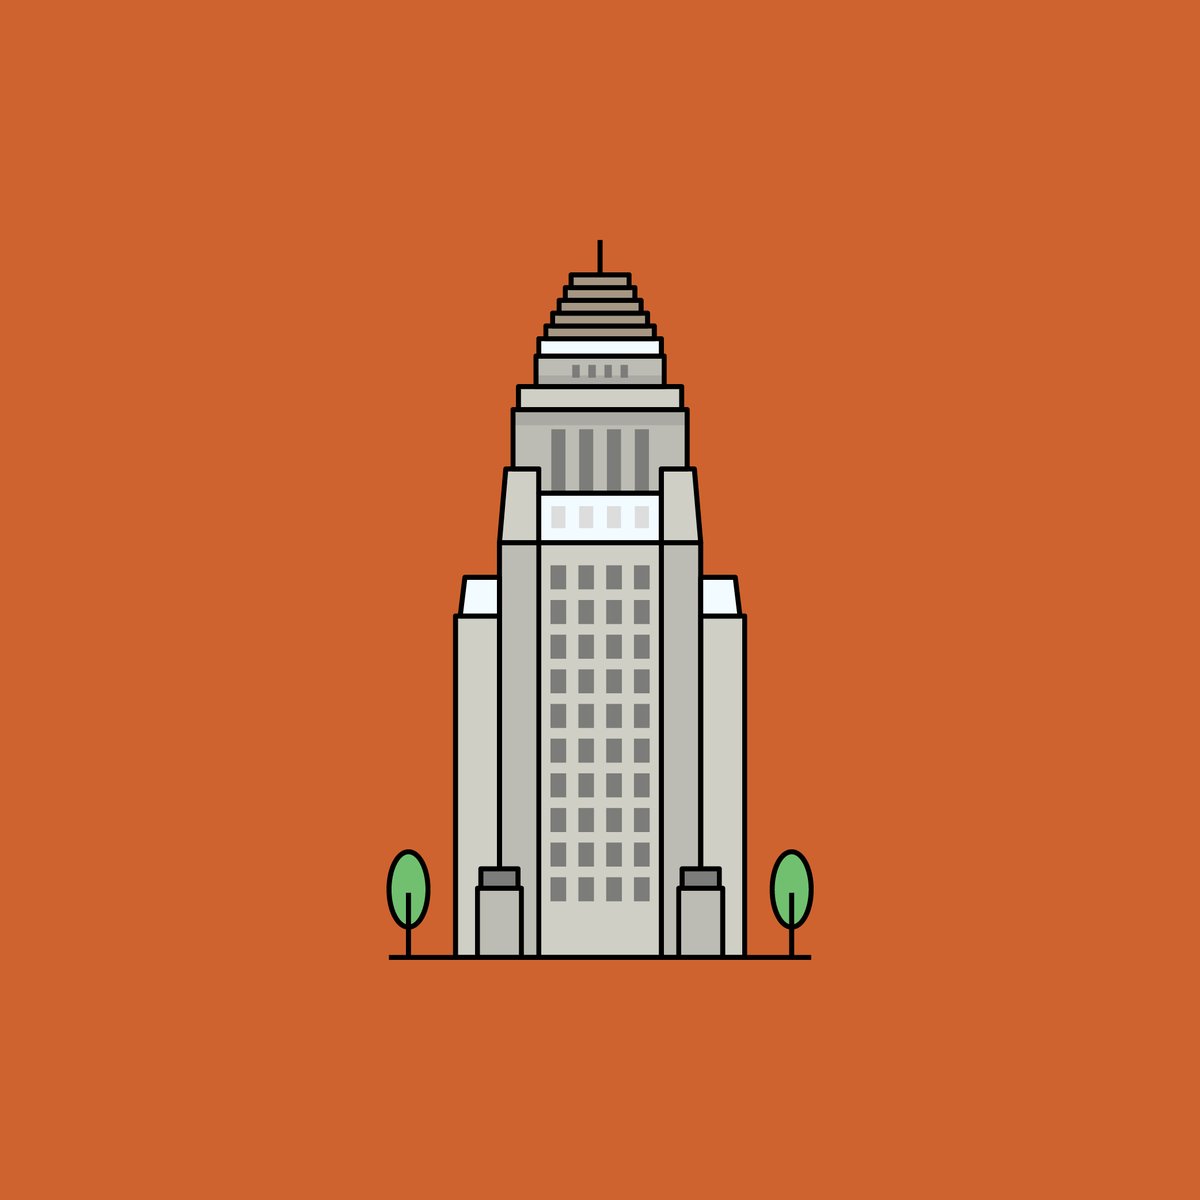 City Hall Los Angeles

#Twitter #TwitterX #Like #follow #icon #viral #graphics #design #colors #illustration #vector #art #vectoricon #icondesign #building #famous #landmark #city #hall #cityhall #los #angeles #losangeles 

shutterstock.com/g/Rimsha+Ibrar